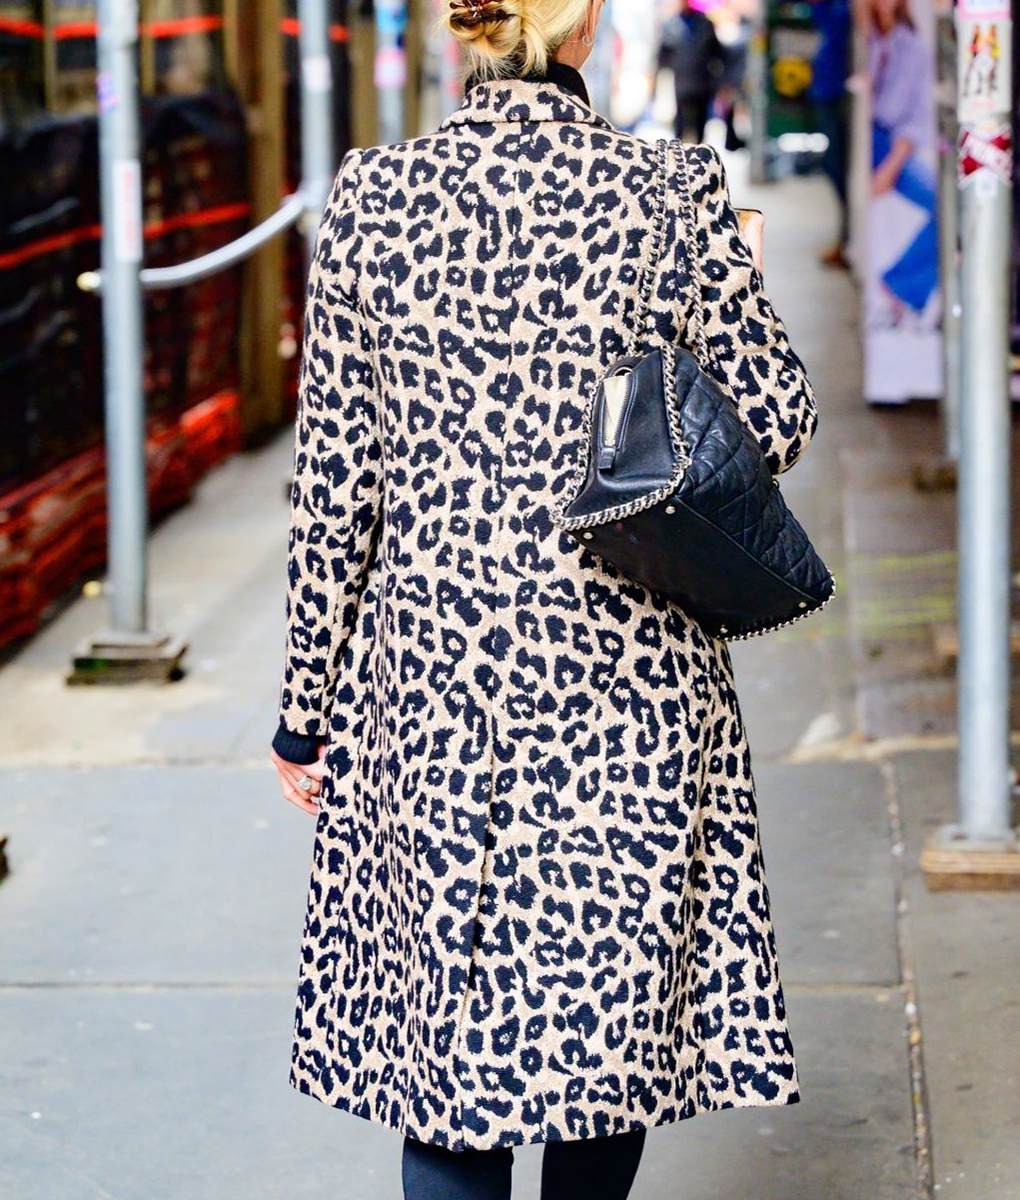 Nicky Hilton Shearling Leopard Coat (3)